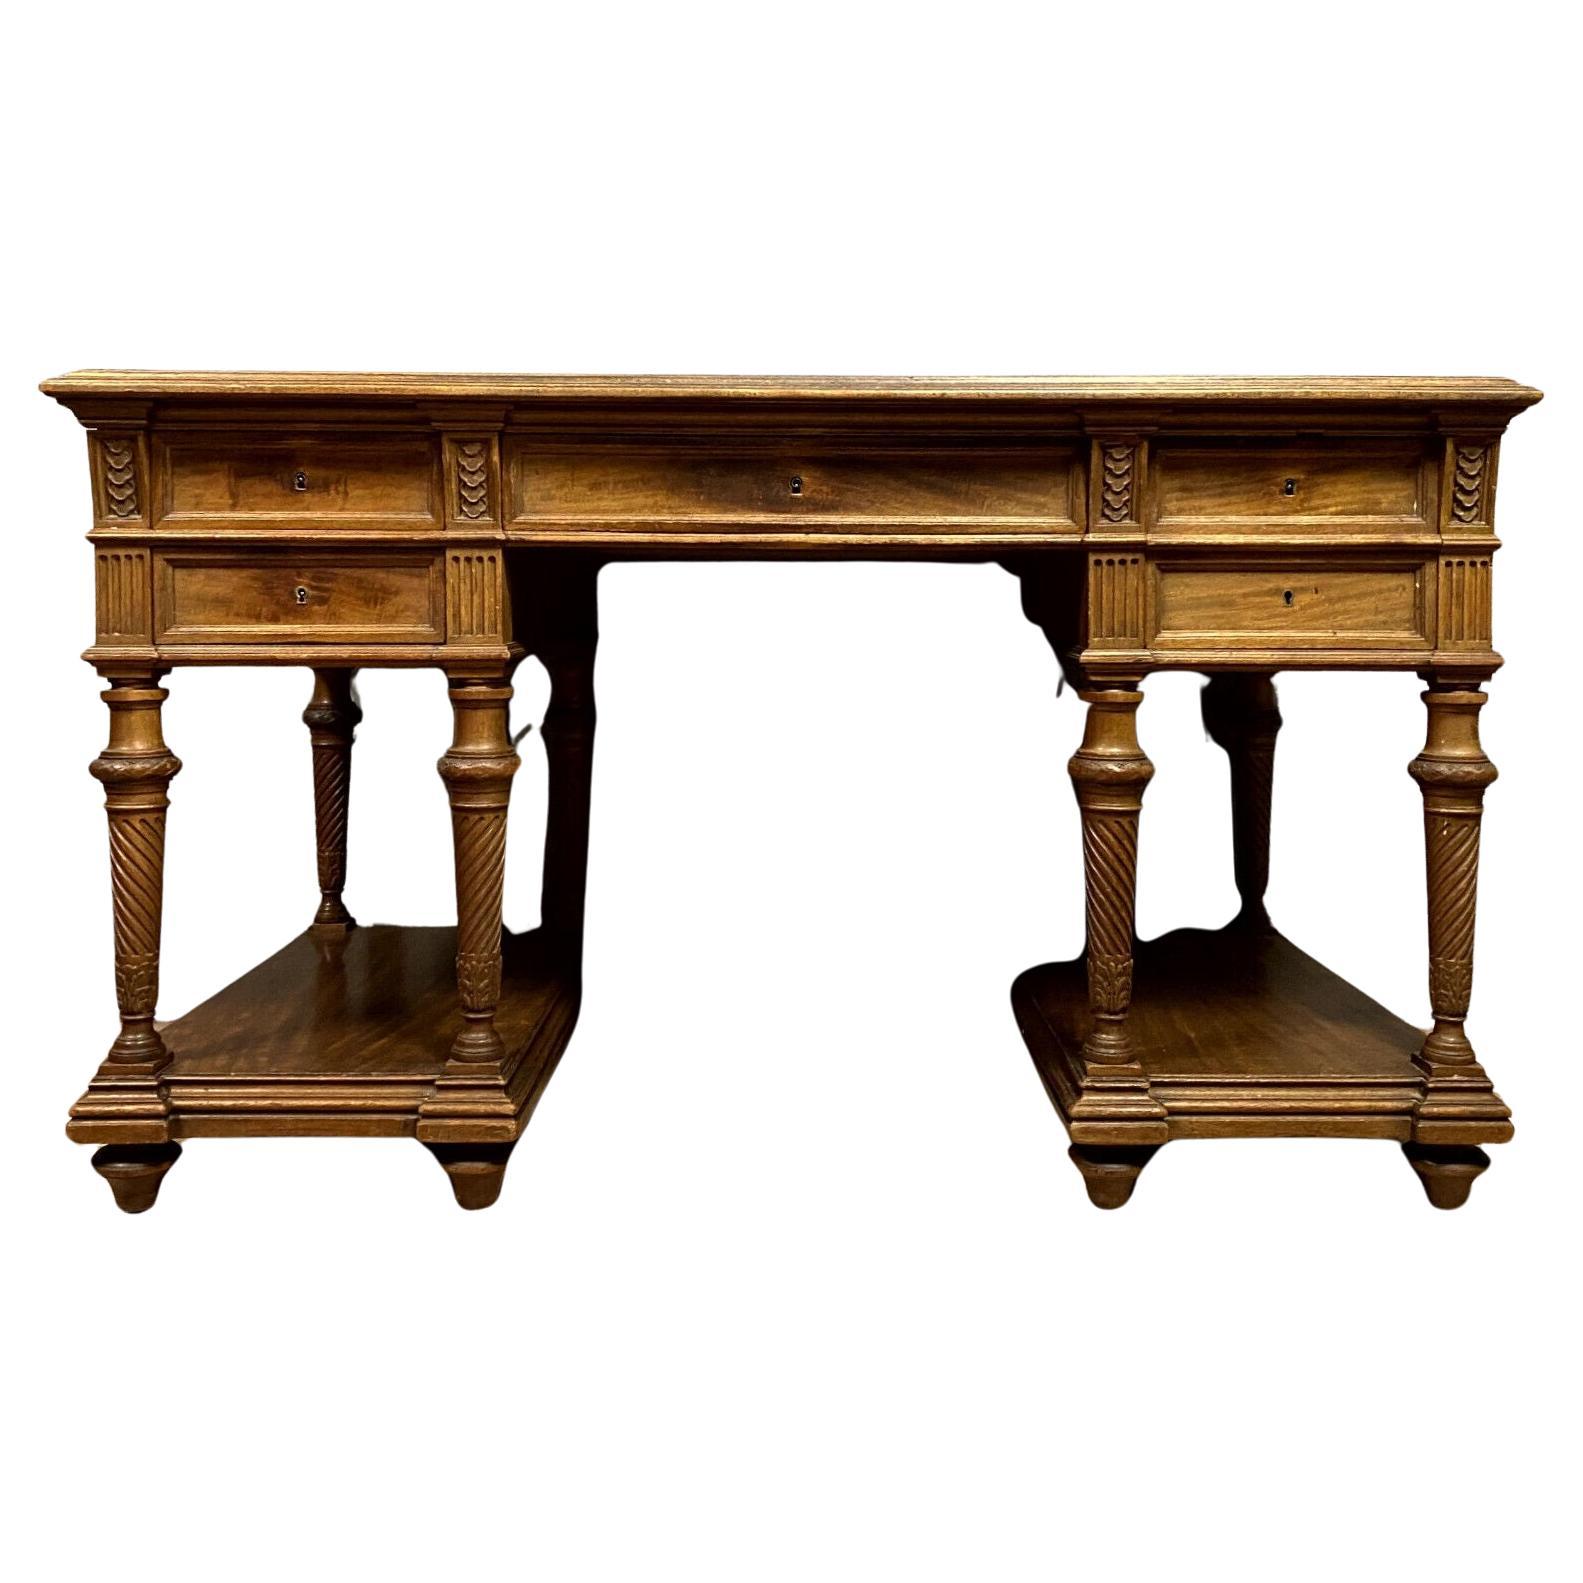 19th Century Mazarin Style Center Desk with Drawers in Walnut -1X54